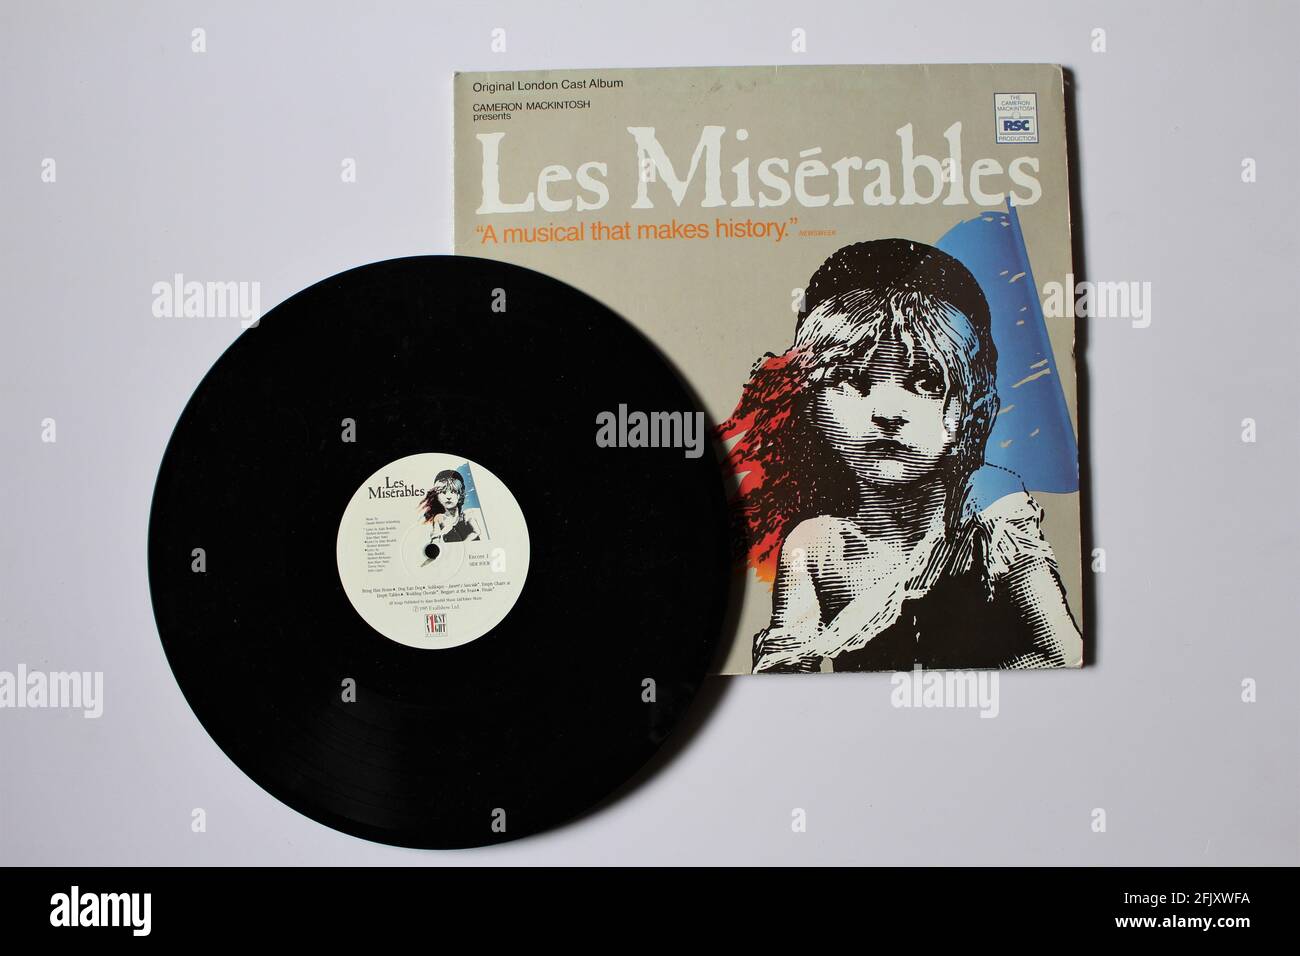 Les Misérables, álbum original de Londres producido por Cameron Mackintosh. Banda sonora en disco LP de vinilo. Foto de stock